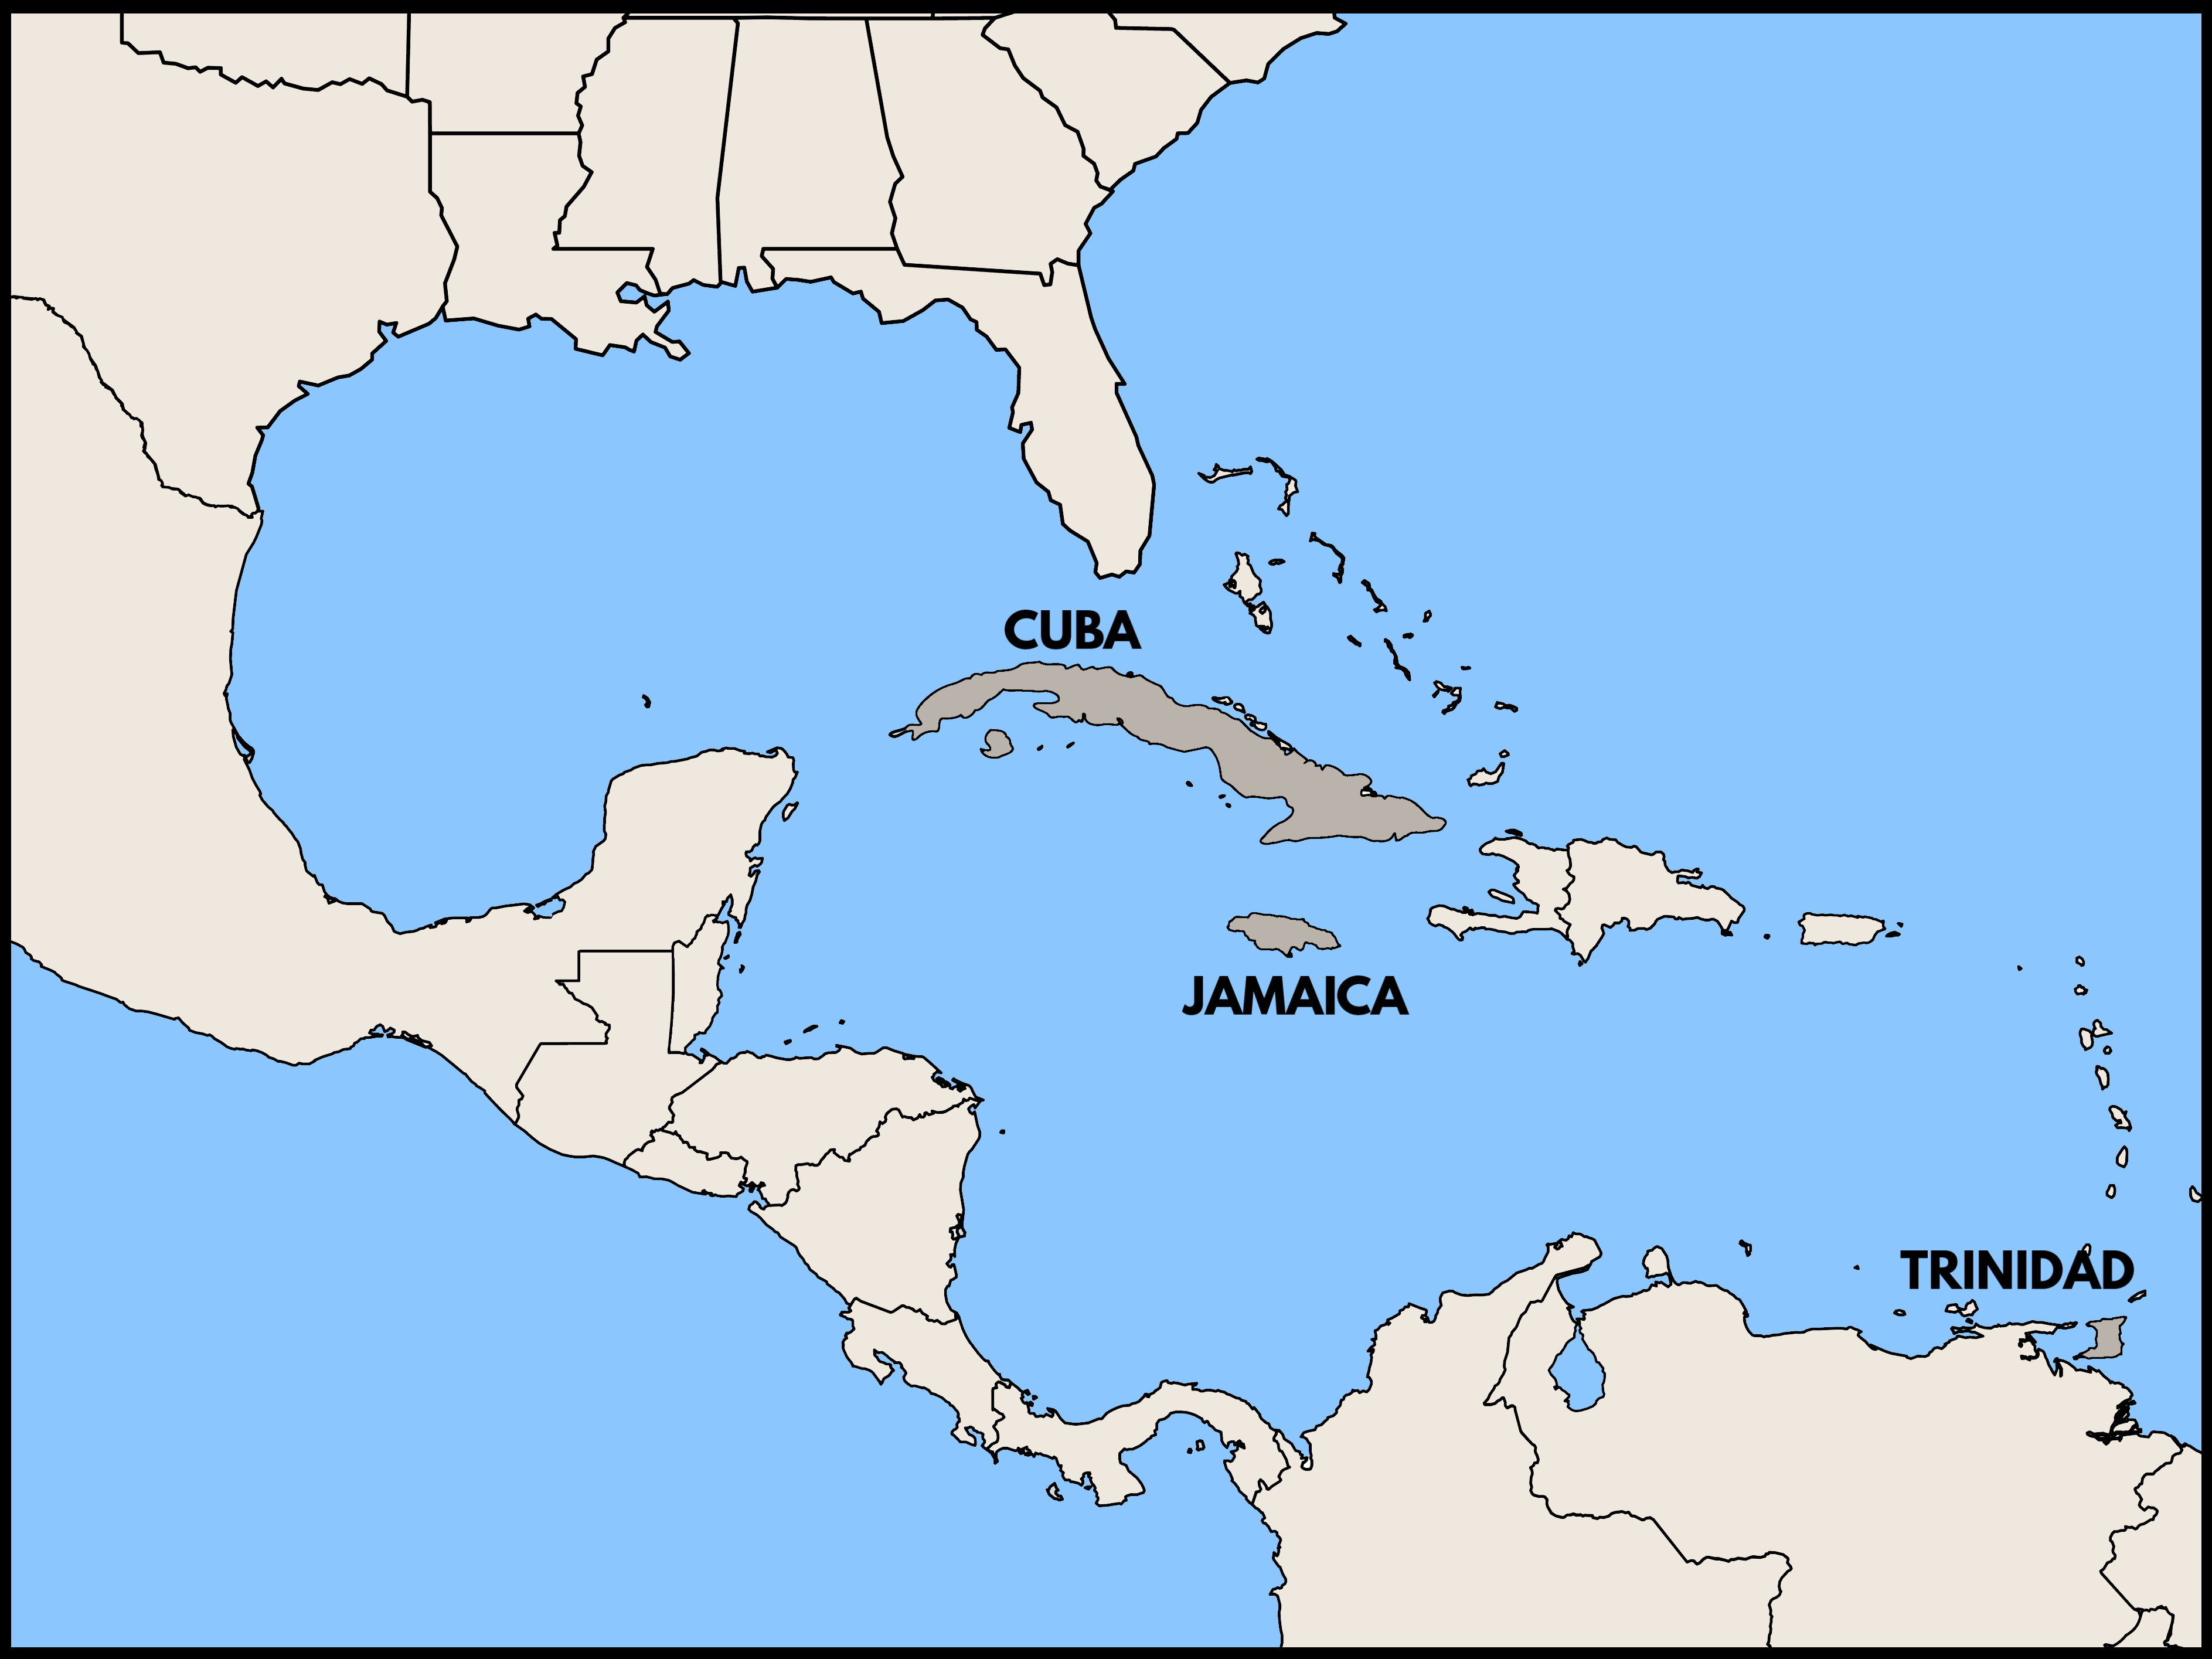 Map of the Caribbean highlighting Jamaica, Cuba, and Trinidad